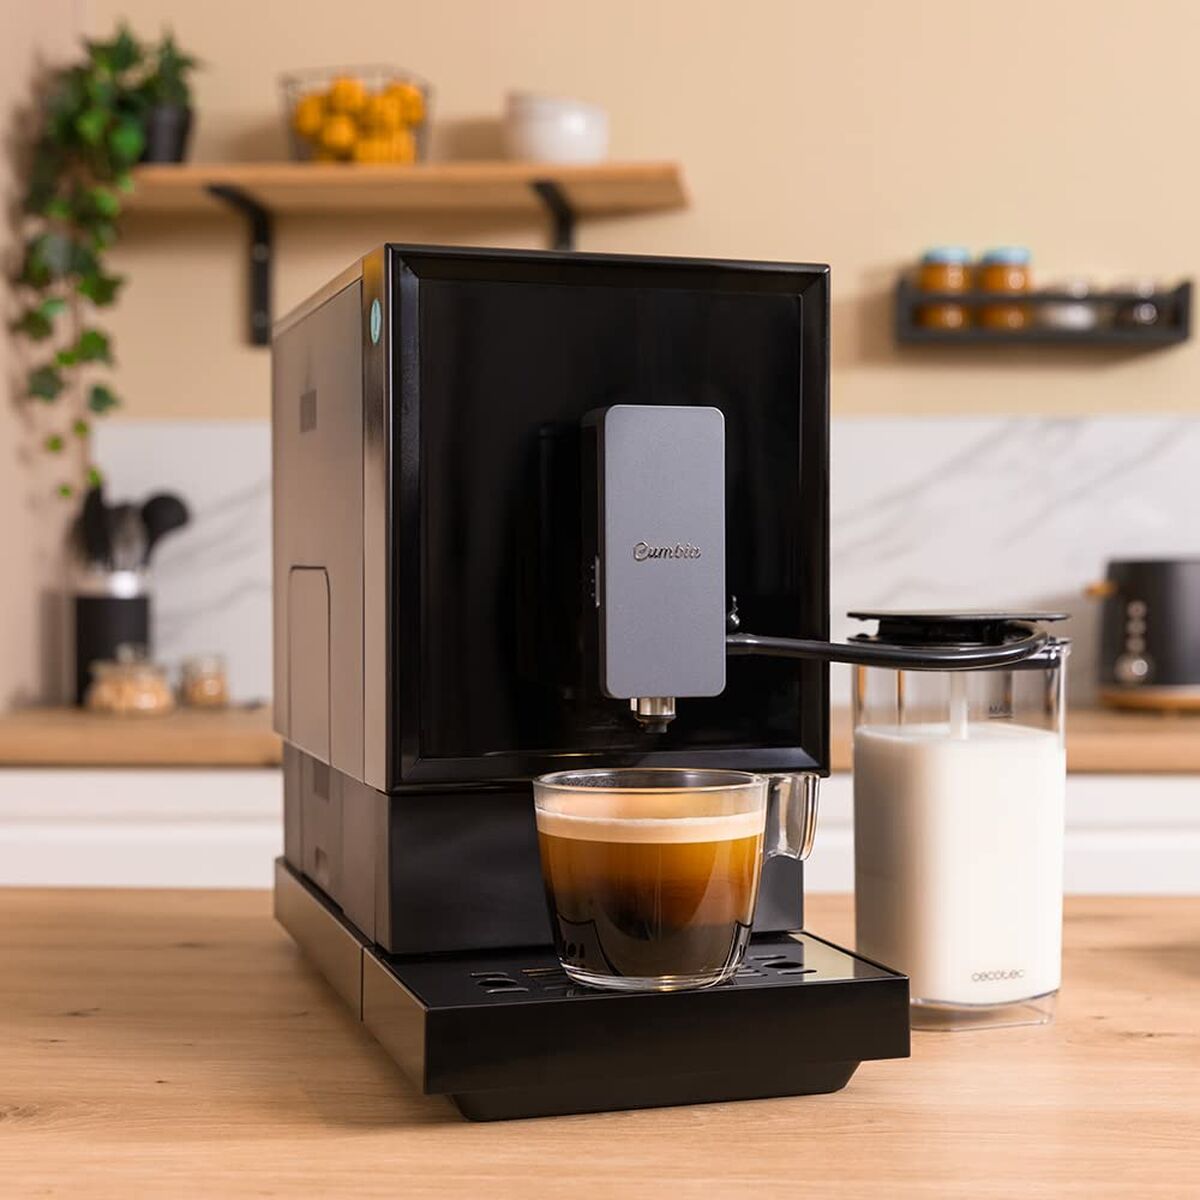 Superautomatische Kaffeemaschine Cecotec POWER MATIC-CCINO Schwarz 1470 W 1,2 L - CA International 